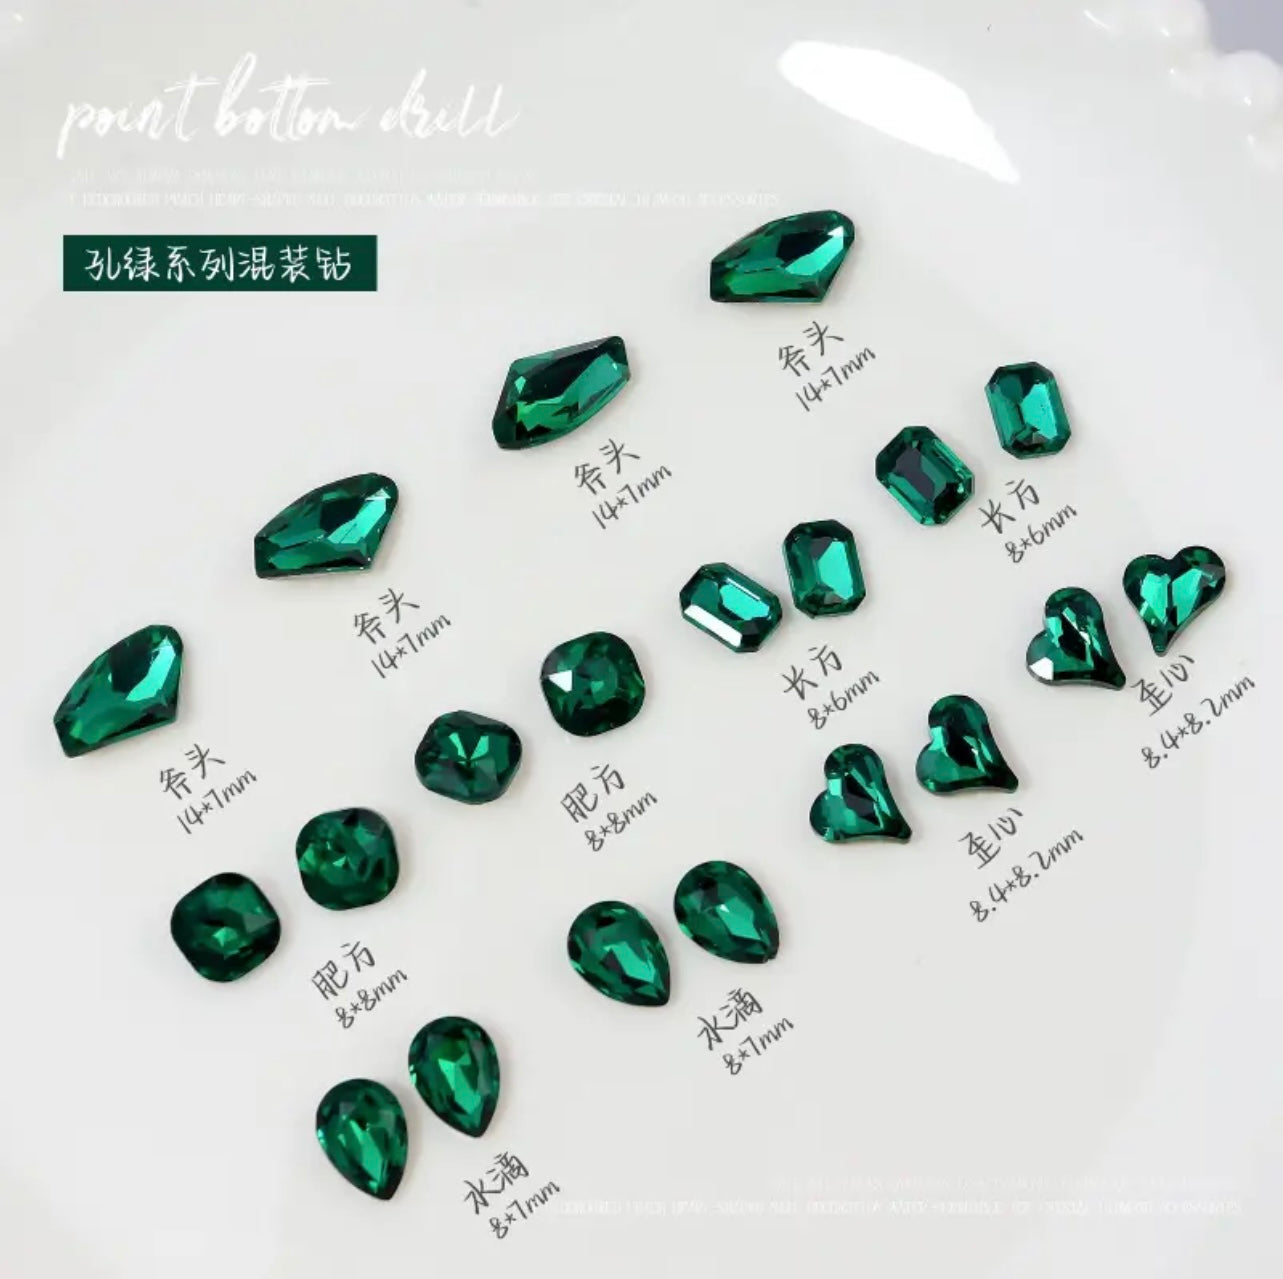 5 Shapes Assorted Rhinestones - Green